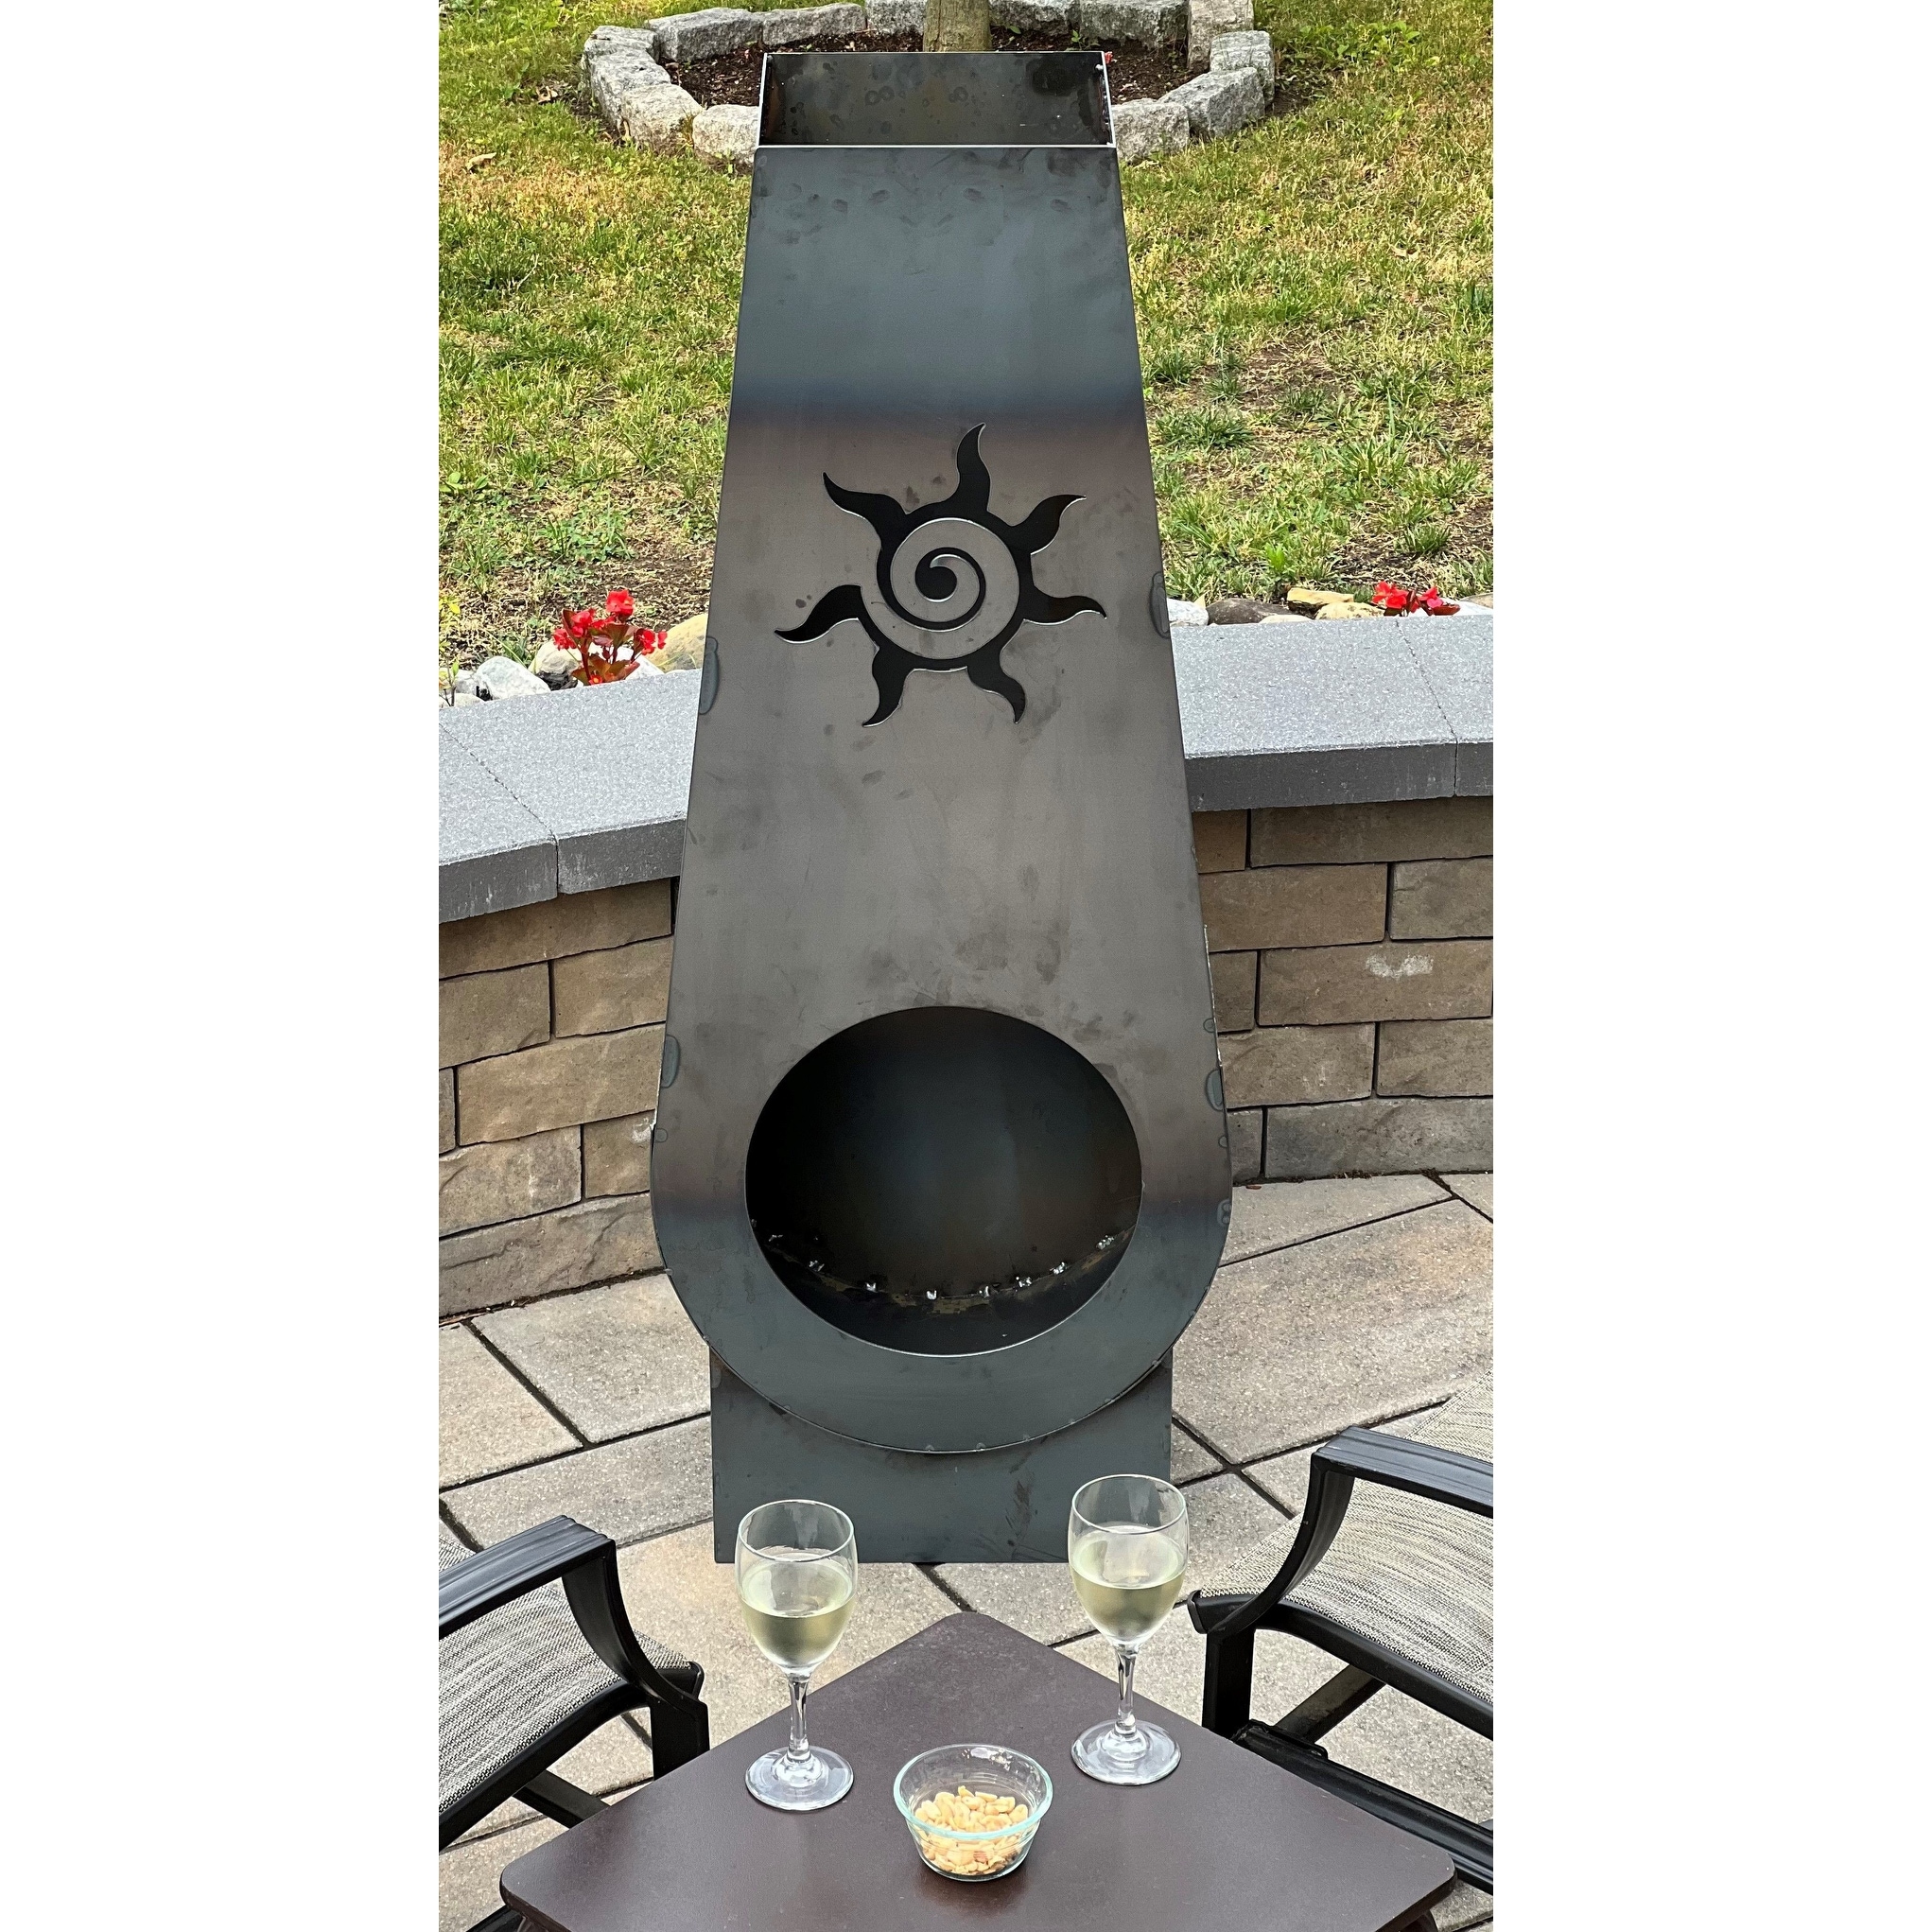 Napa East Suns Fire 47 inch Steel Outdoor Mini Fireplace, Steel Gray